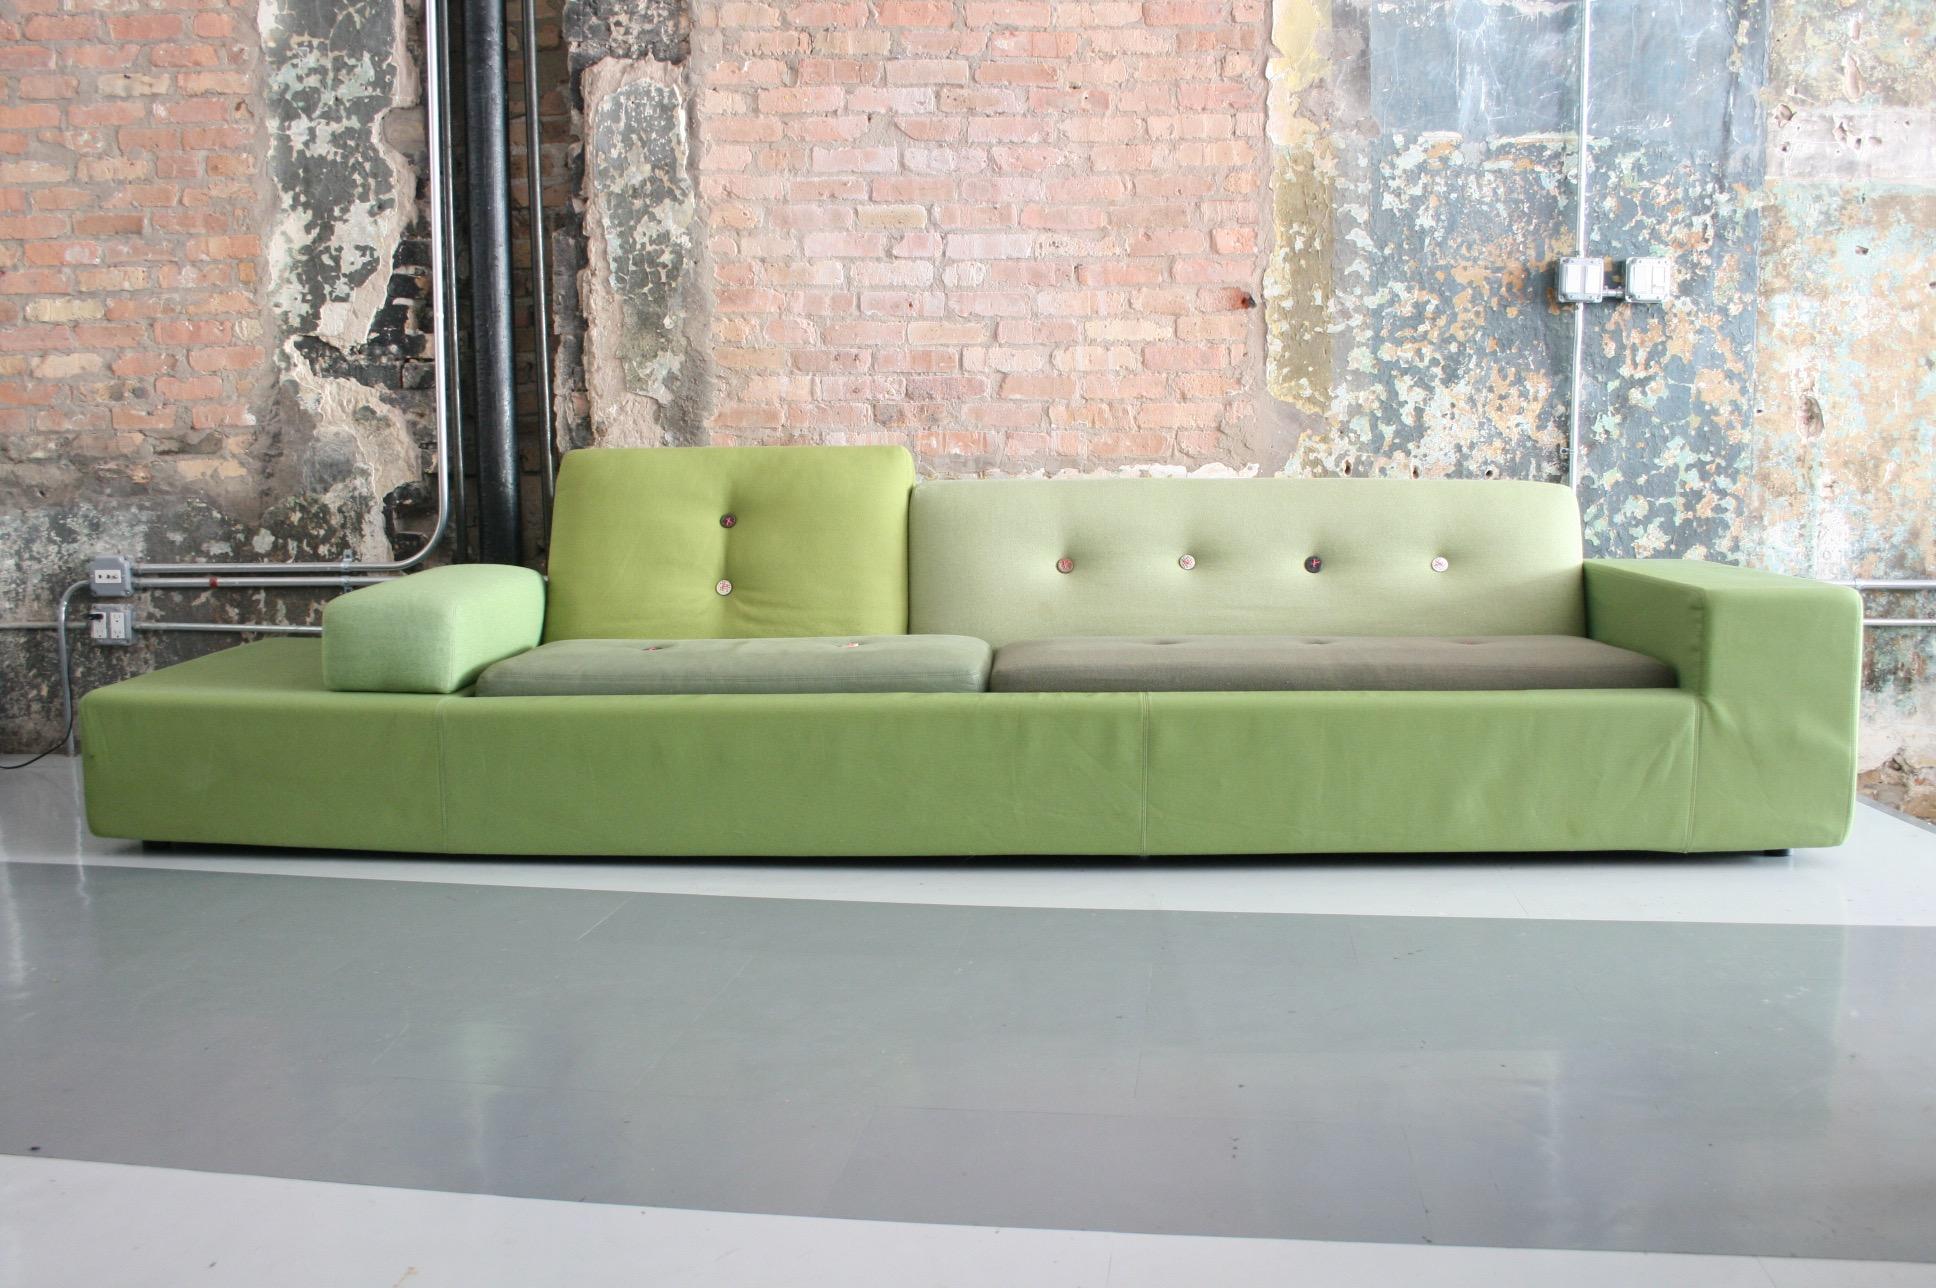 German 'Polder' Sofa by Hella Jongerius for Vitra